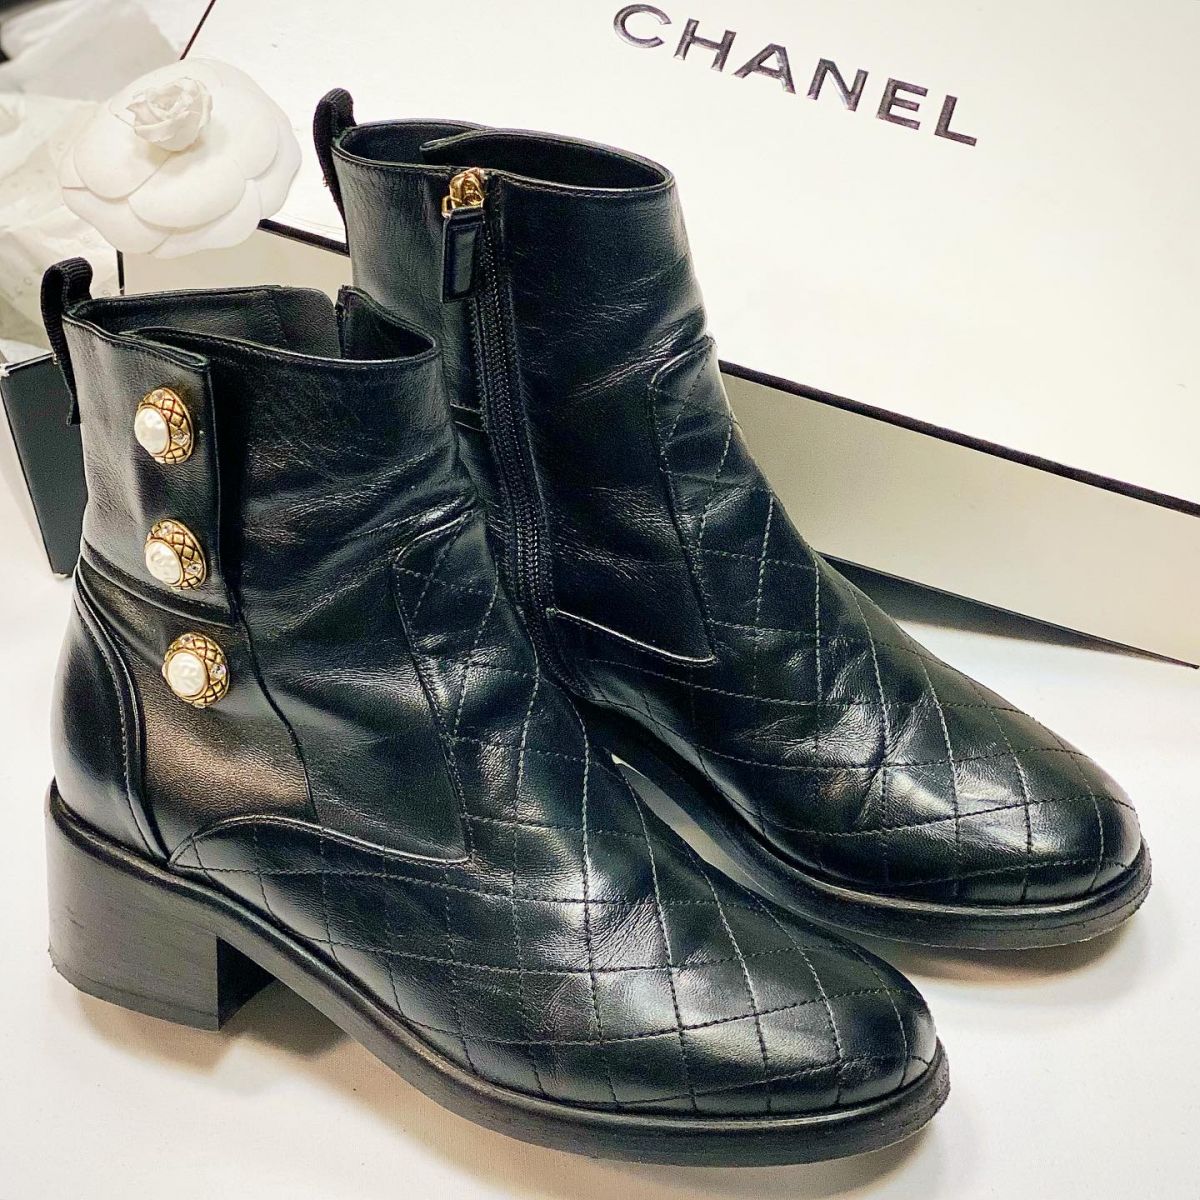 Ботинки Chanel размер 38 цена 30 770 руб 